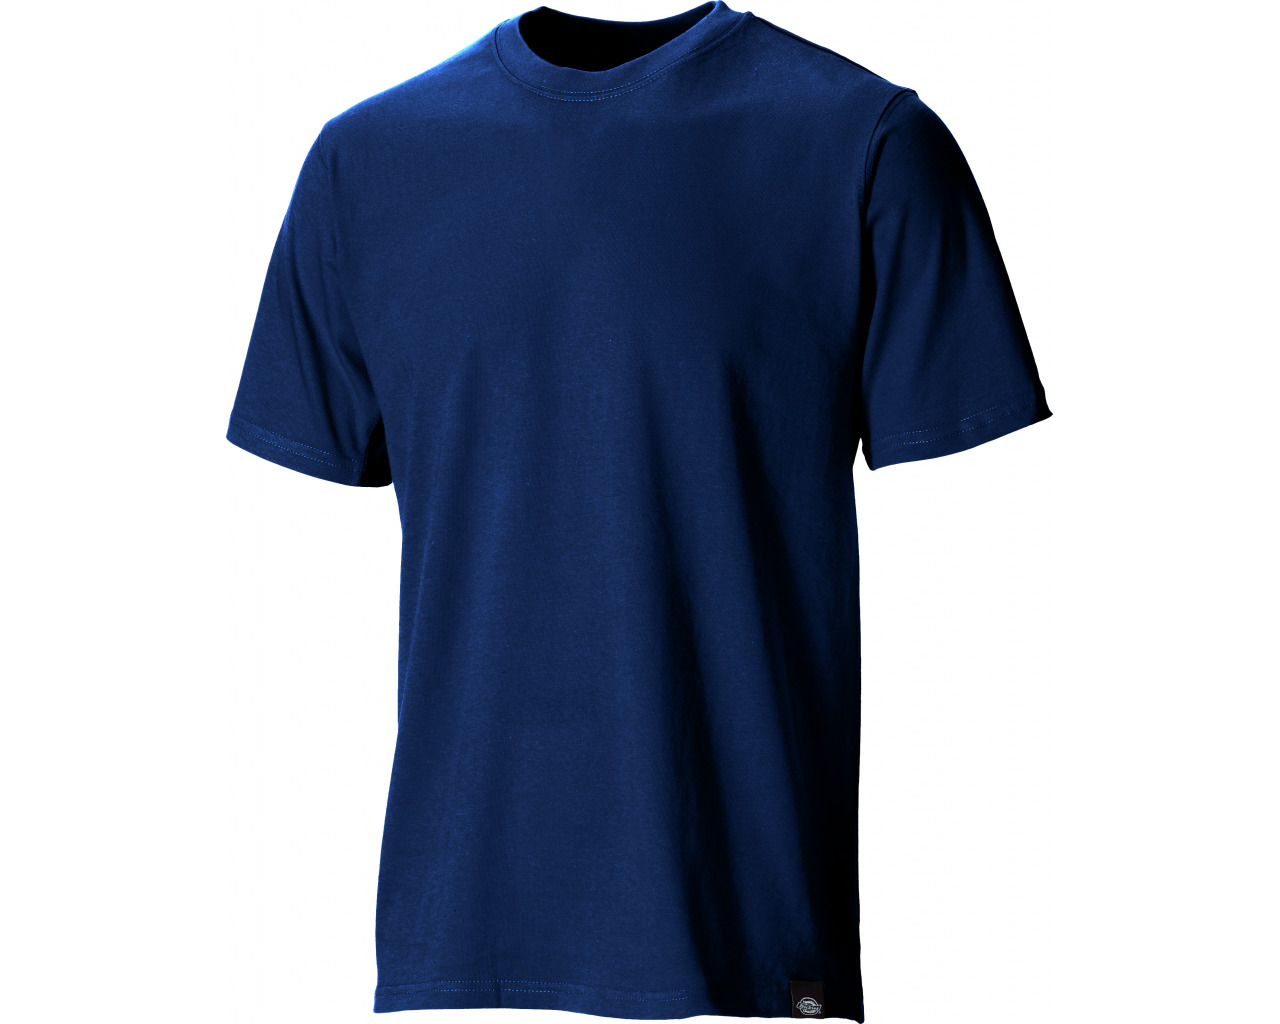 buy-men-s-navy-blue-t-shirt-100-cotton-plain-t-shirts-filmyvastra